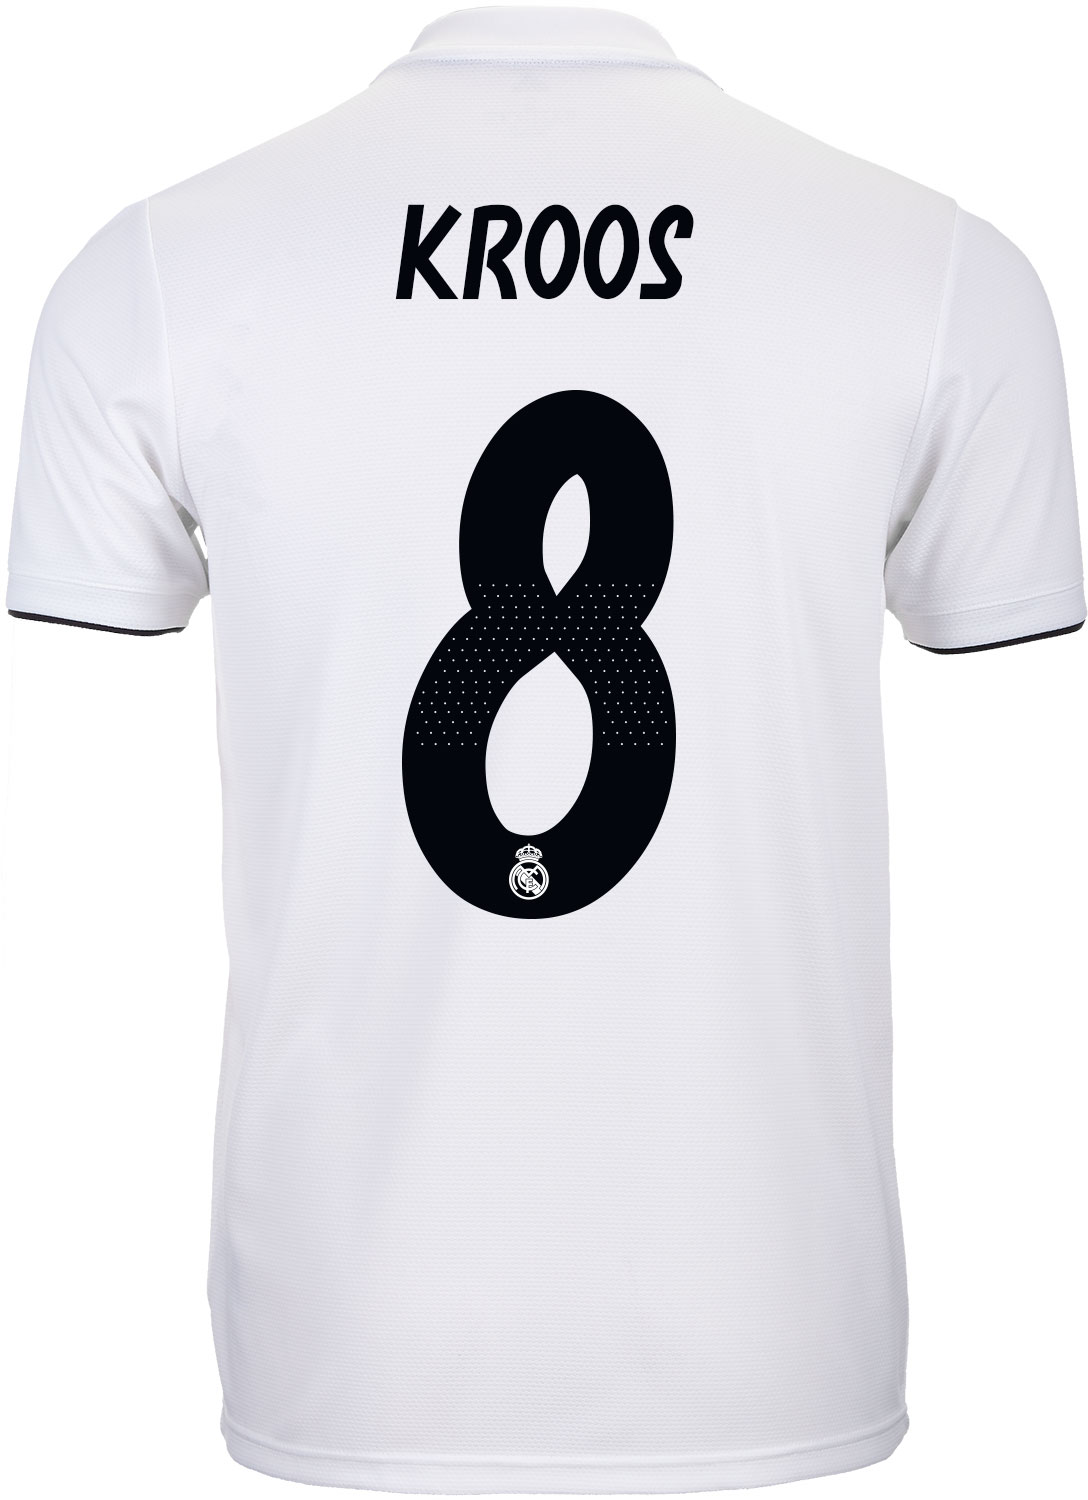 Adidas Toni Kroos Real Madrid Home Jersey 2018 19 Soccerpro